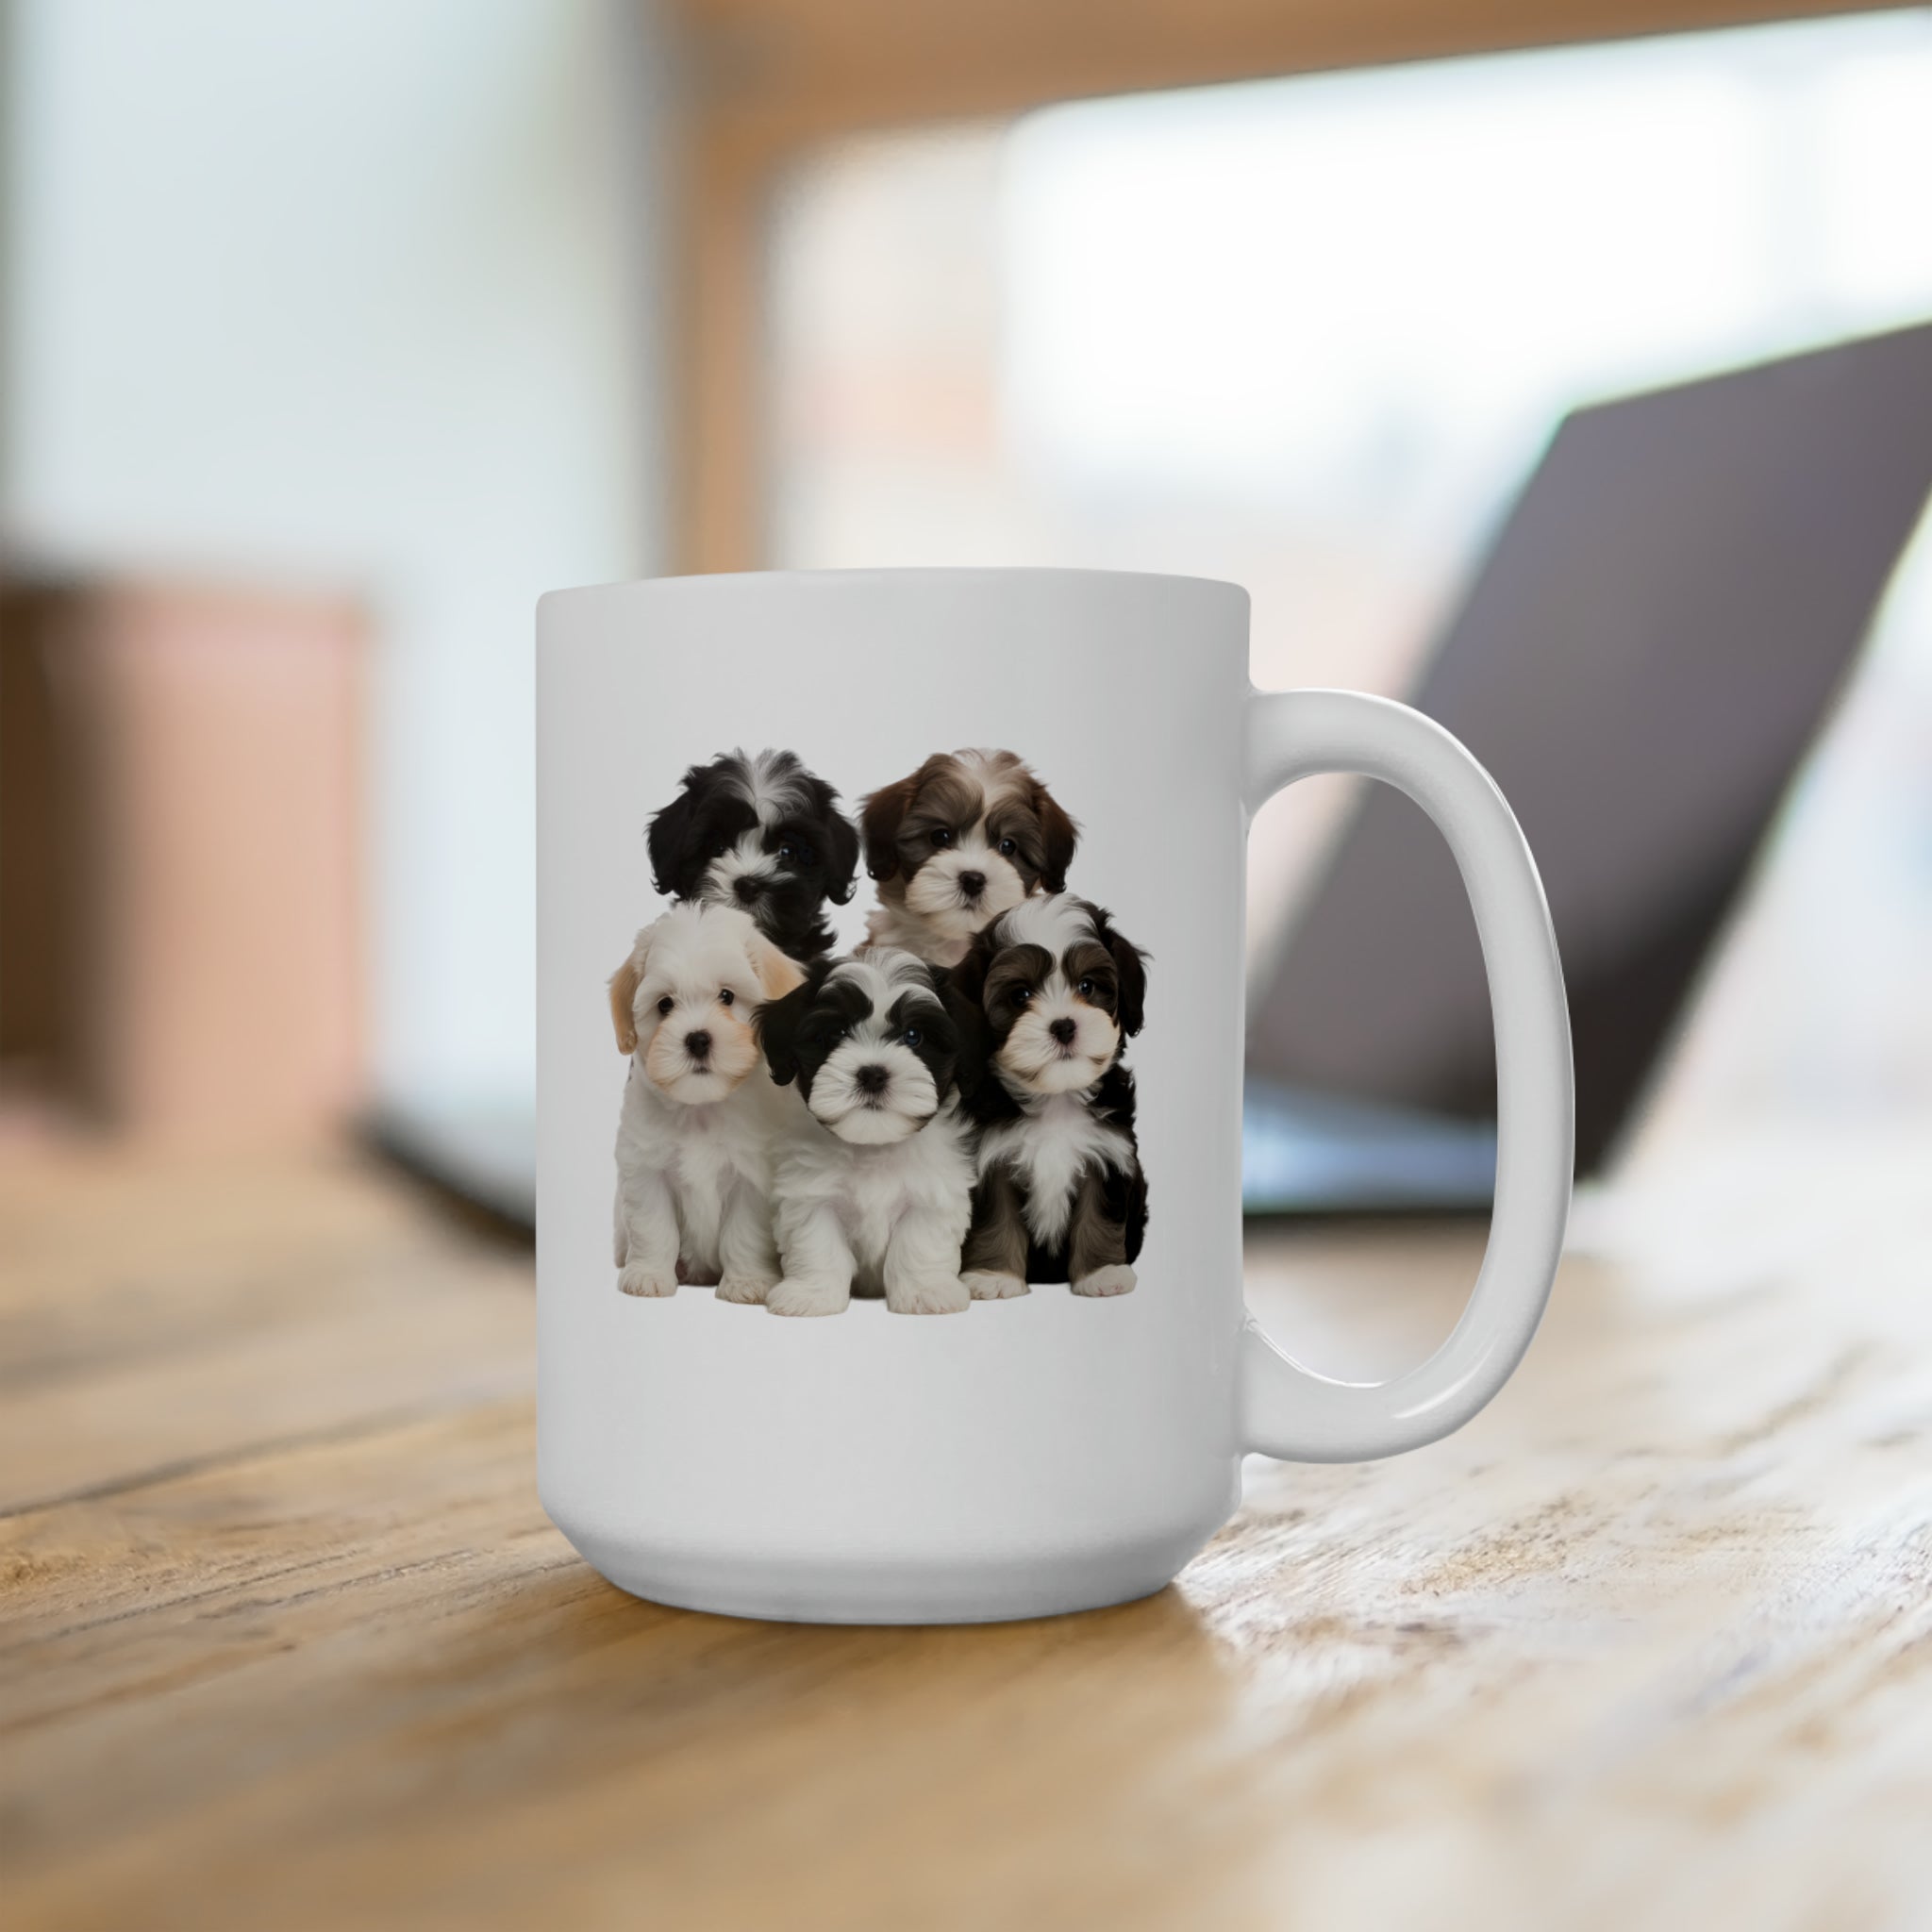 Bichon Shih Tzu Mix Puppies - Ceramic Mug 15oz